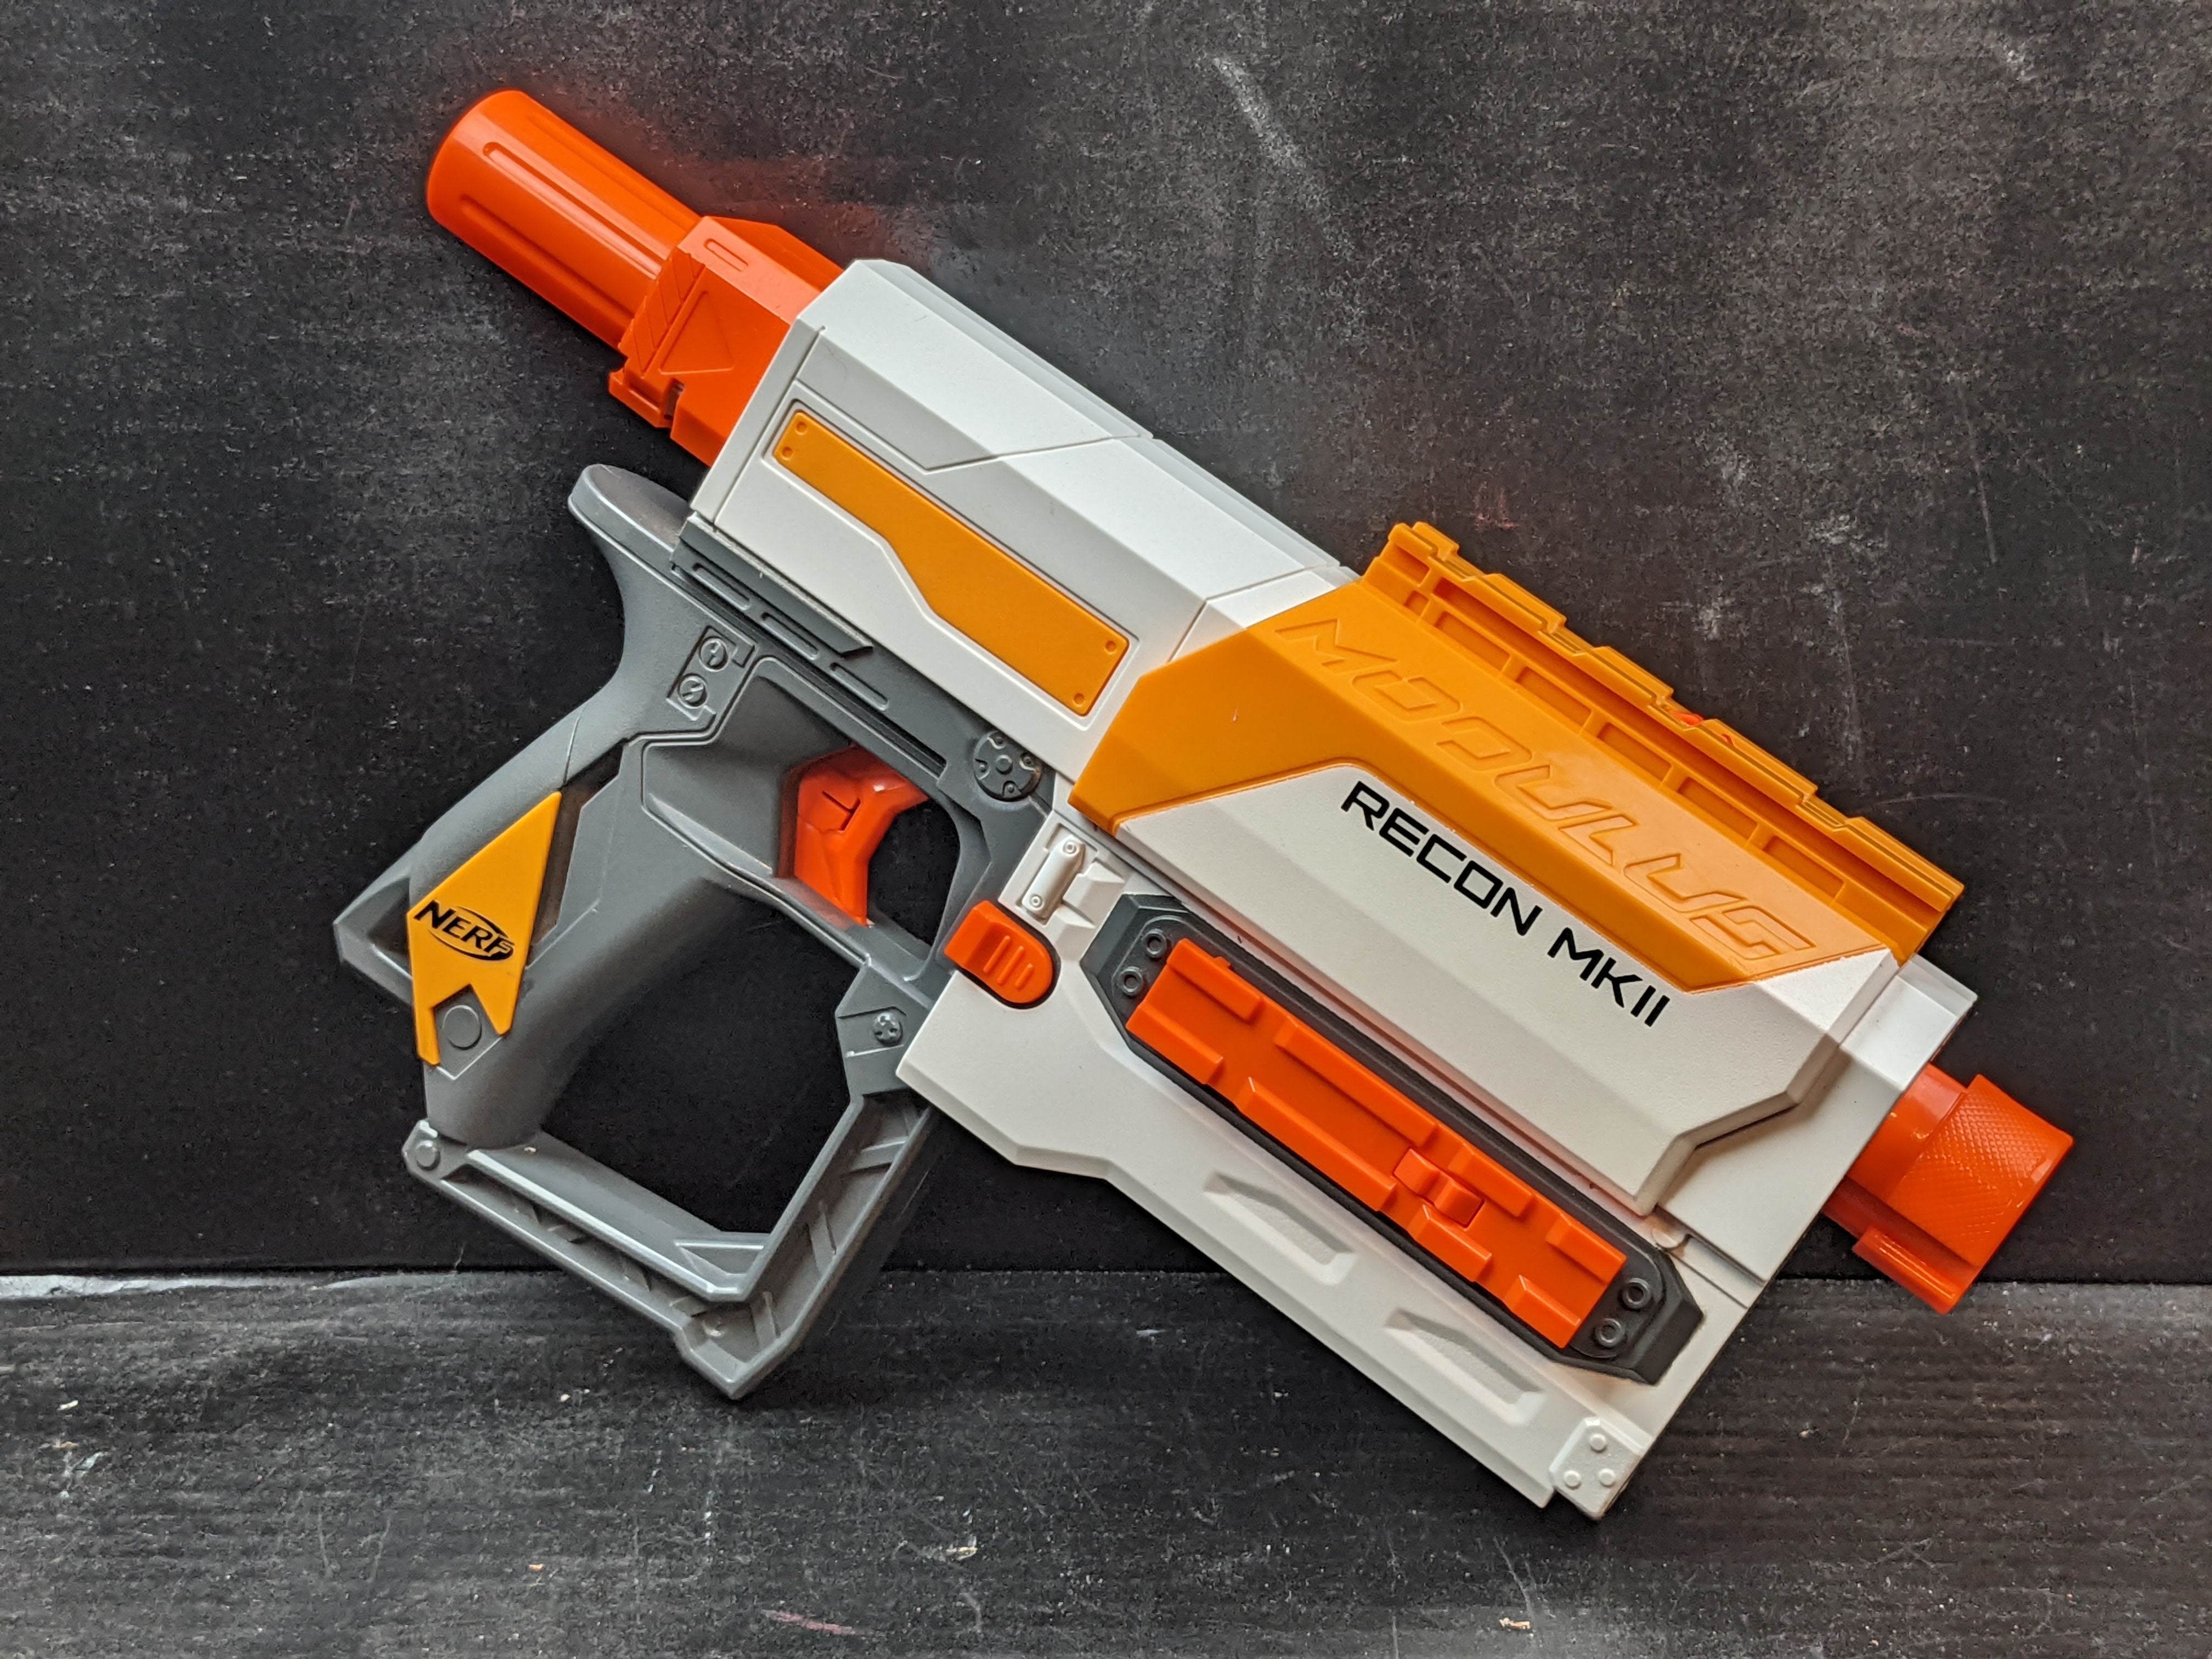 Nerf Modulus Recon MK II Gun